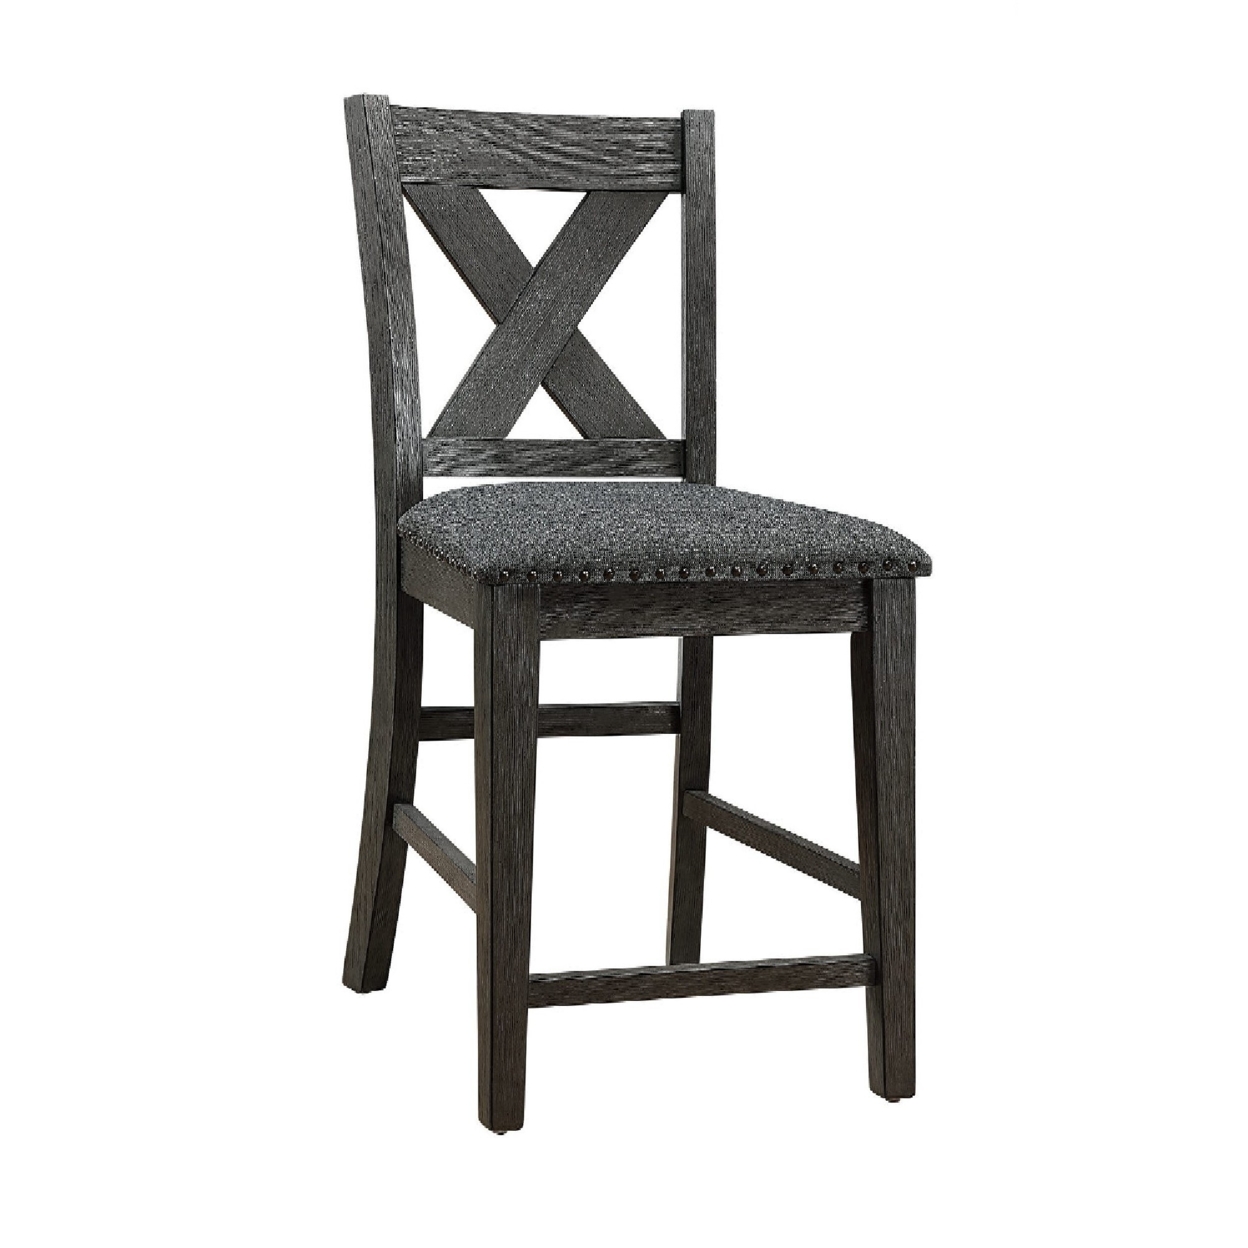 Chair With High X Shaped Back And Nailhead Trim, Brown- Saltoro Sherpi